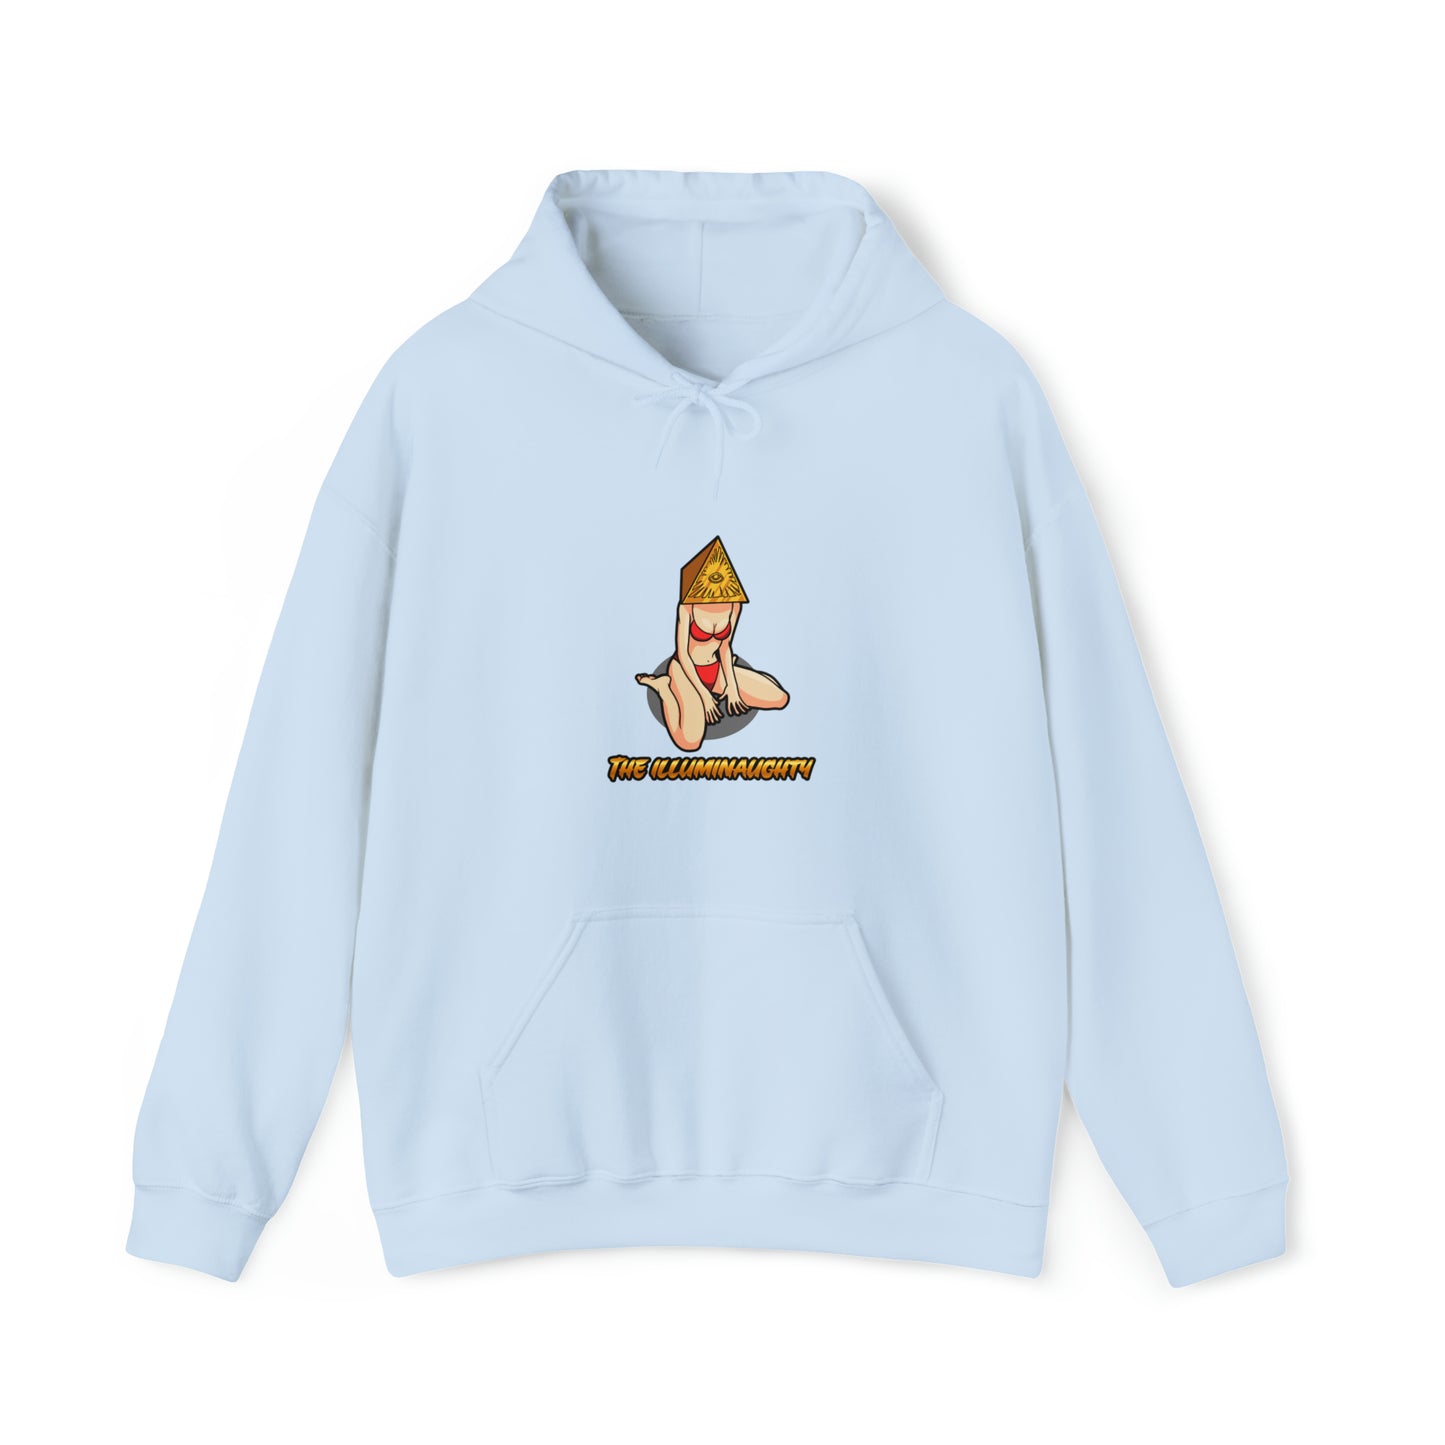 Custom Parody Hooded Sweatshirt, The Illuminaughty design